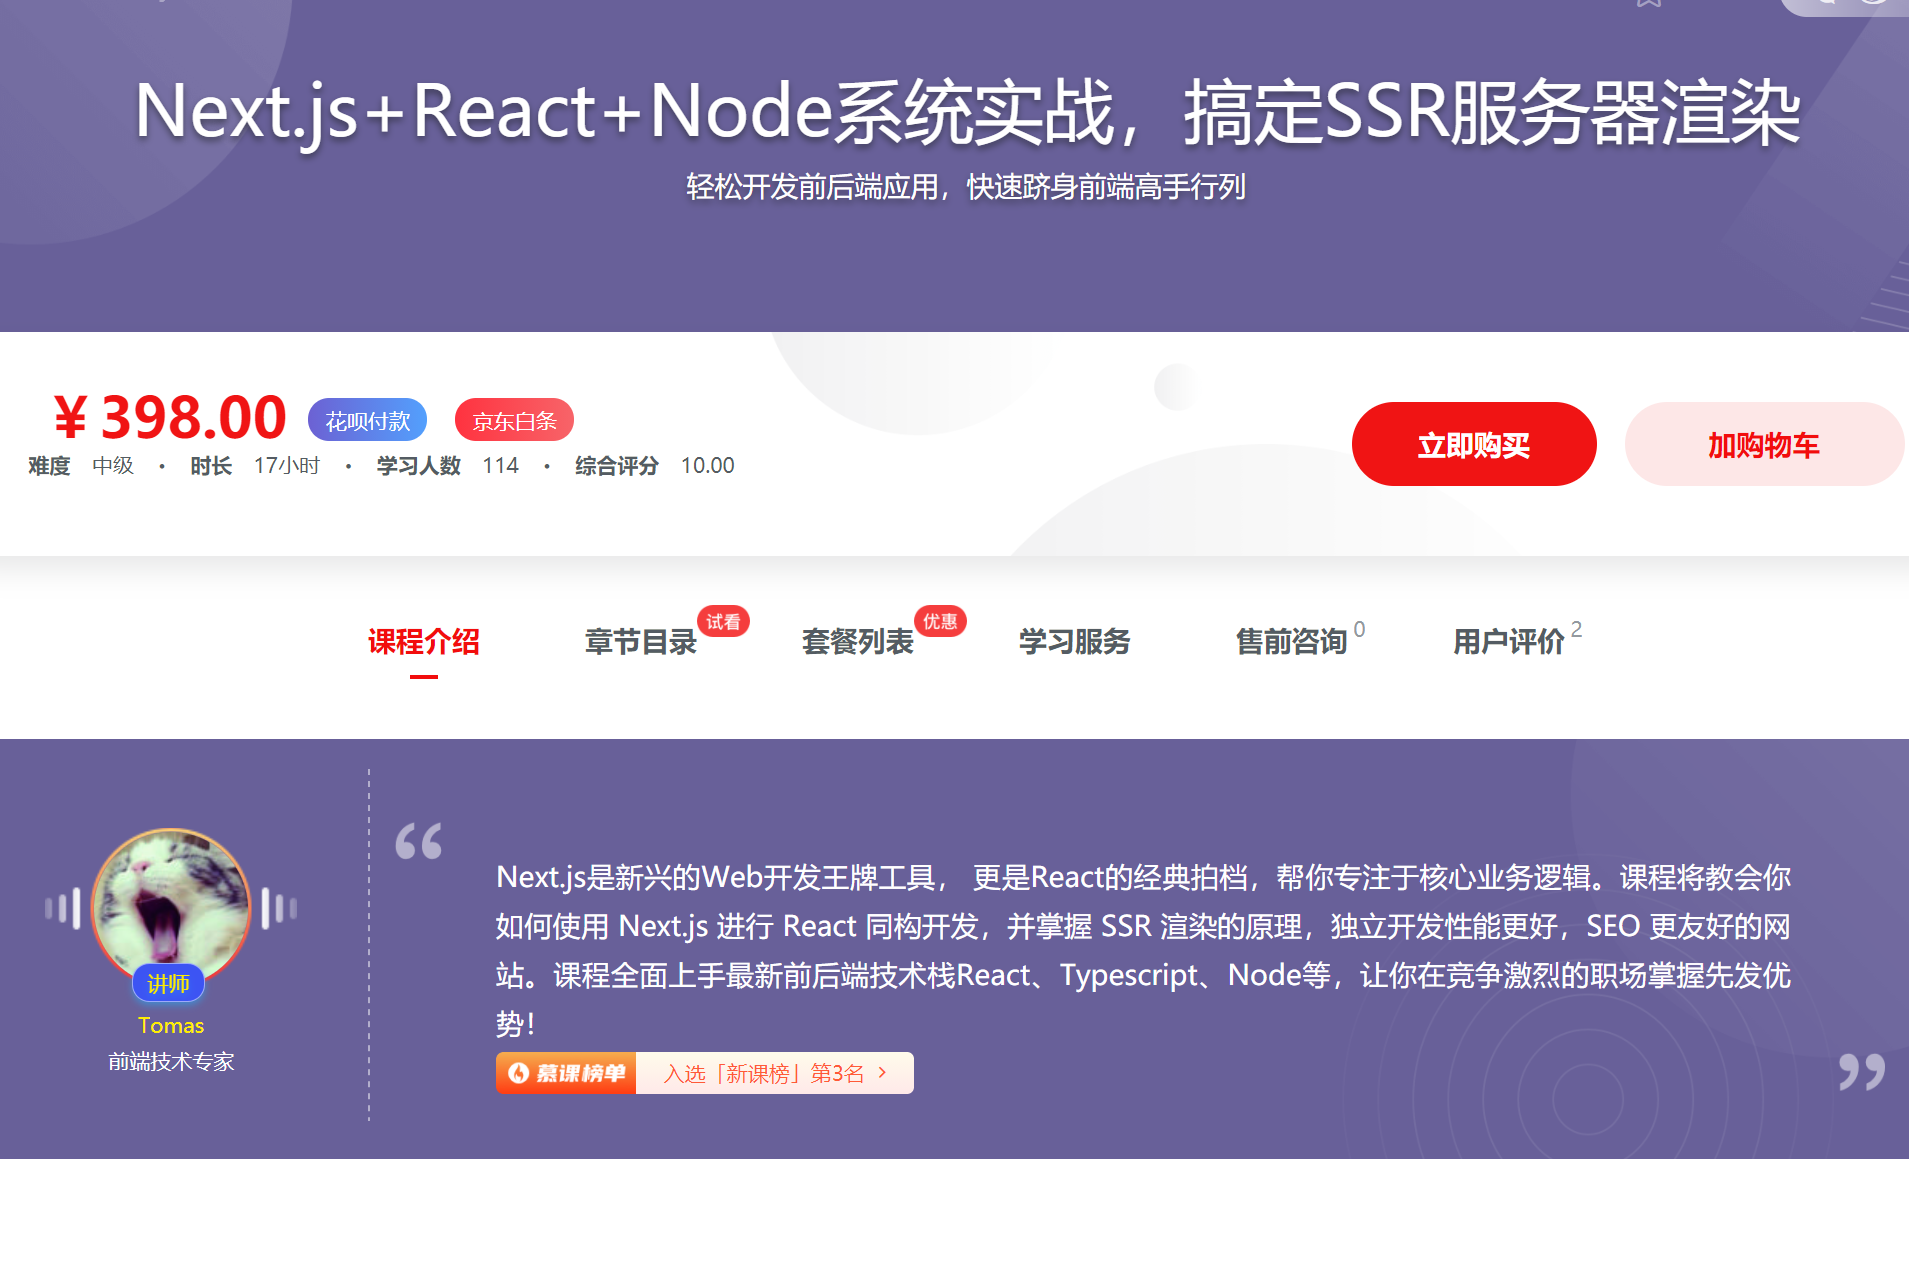 【IT2区上新】018.【慕课专栏】Next.js+React+Node系统实战，搞定SSR服务器渲染[5章]